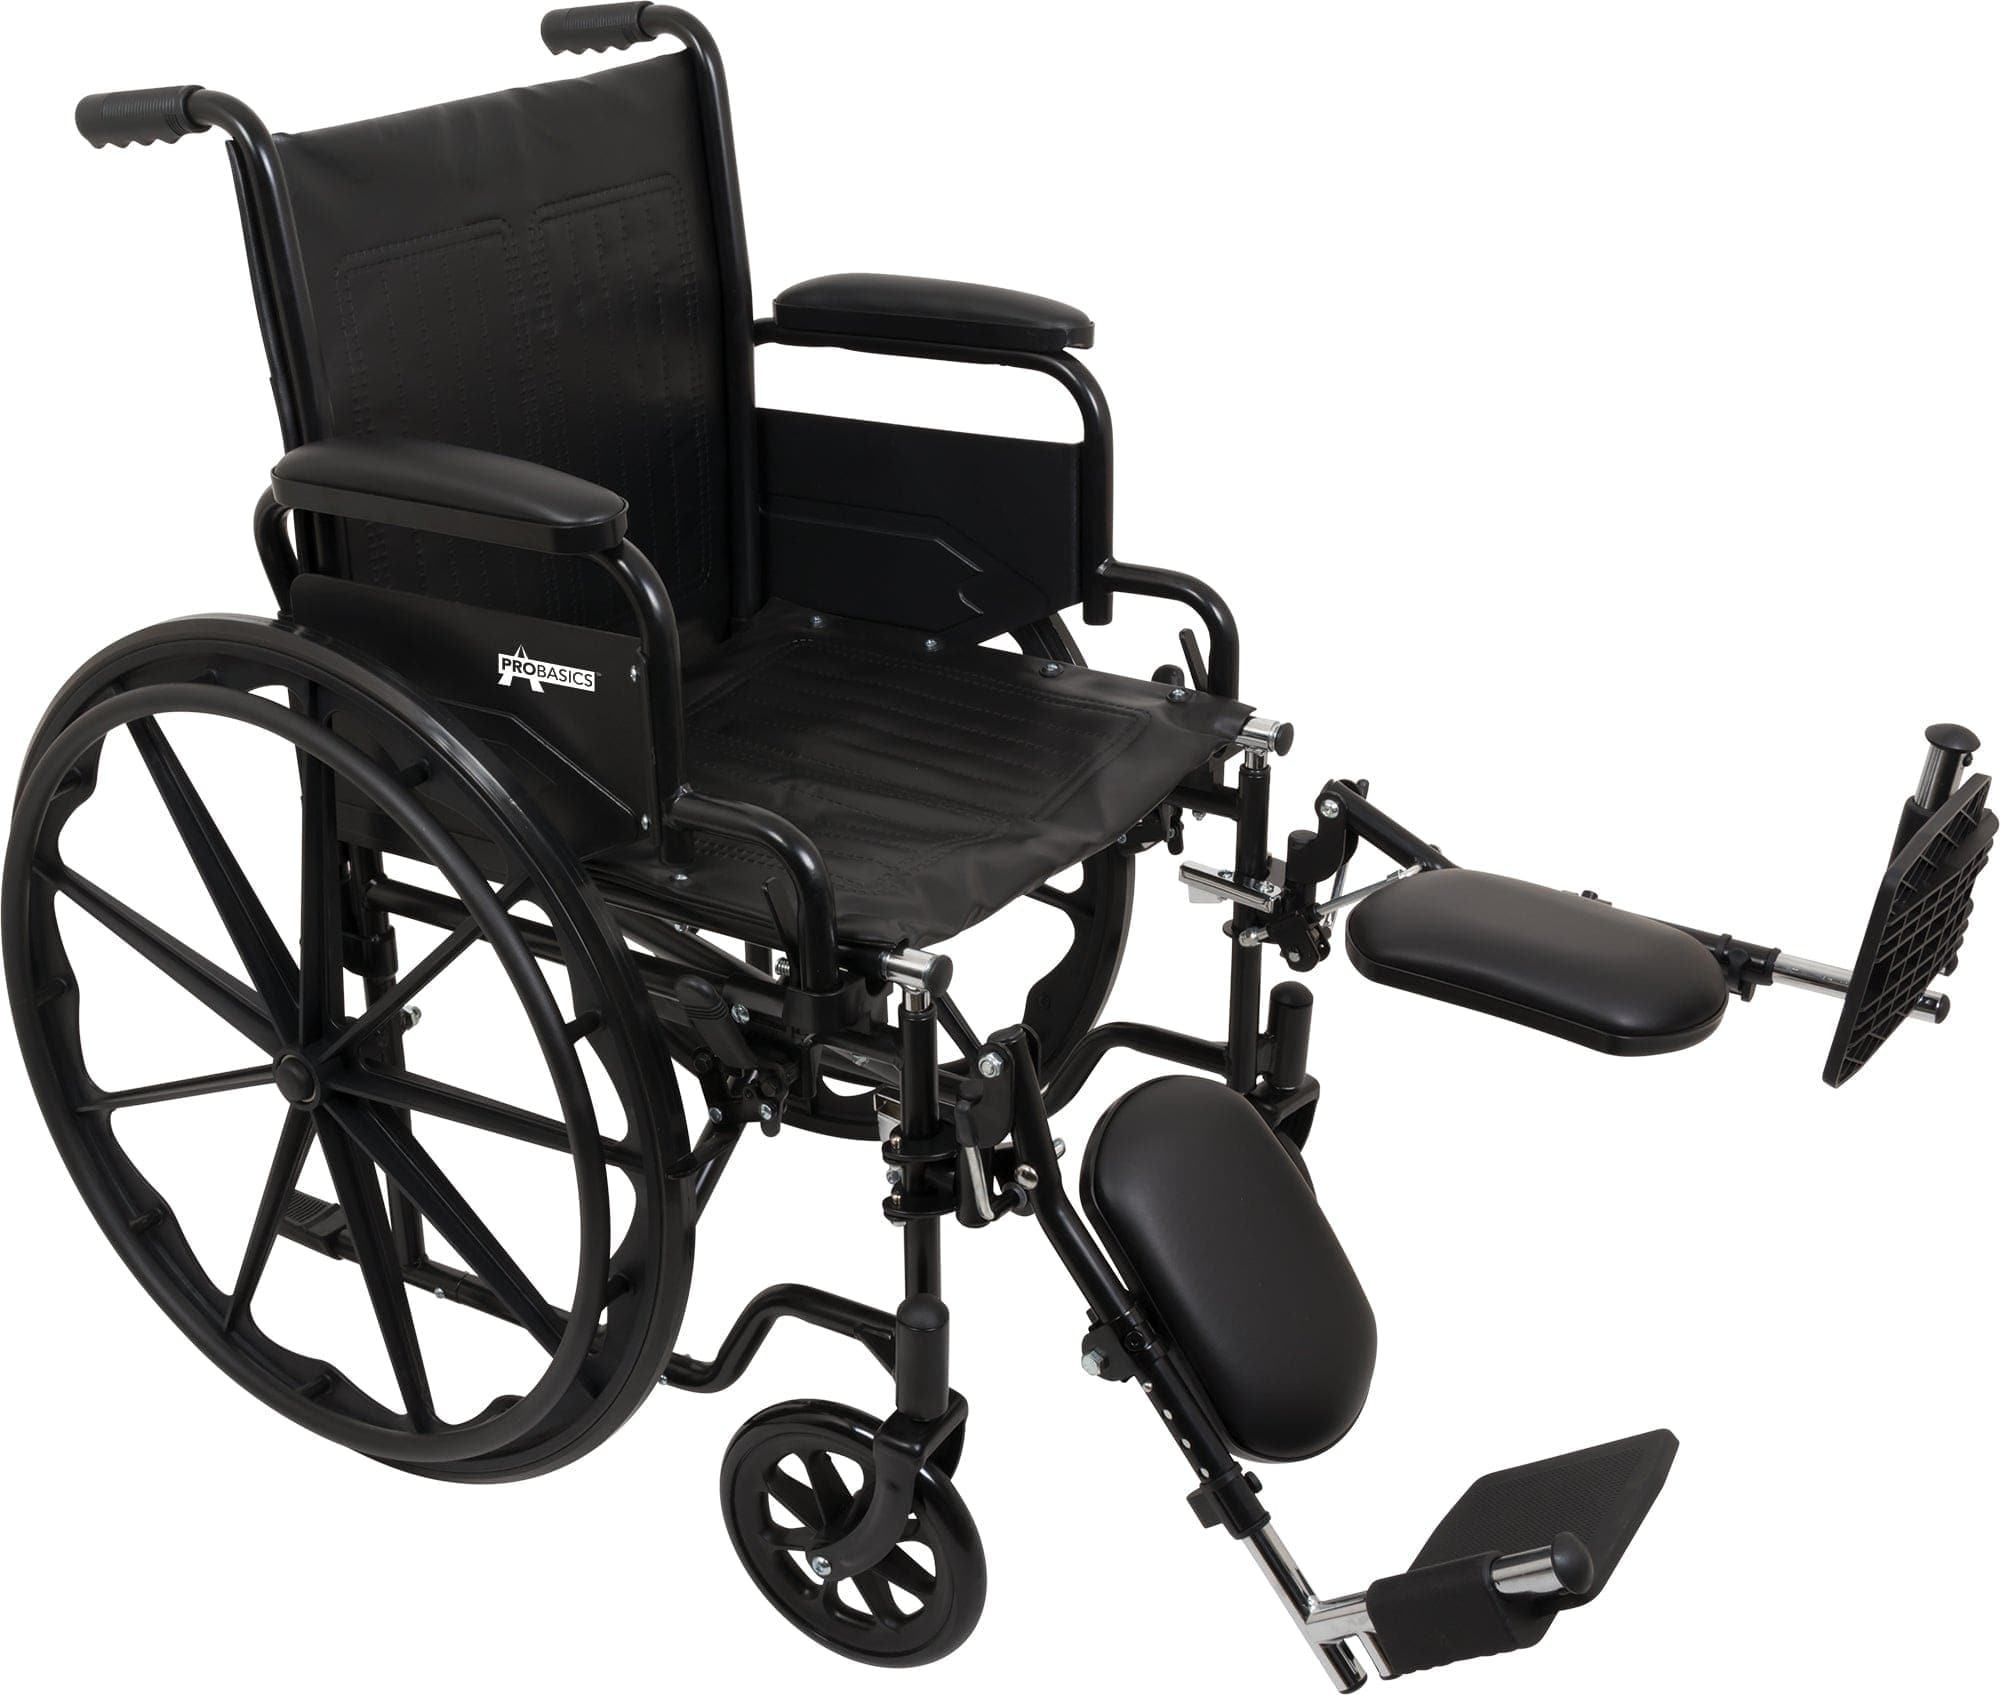 Compass Health K1 Wheelchairs Compass Health ProBasics K1 Wheelchair with 18 x 16 Seat,